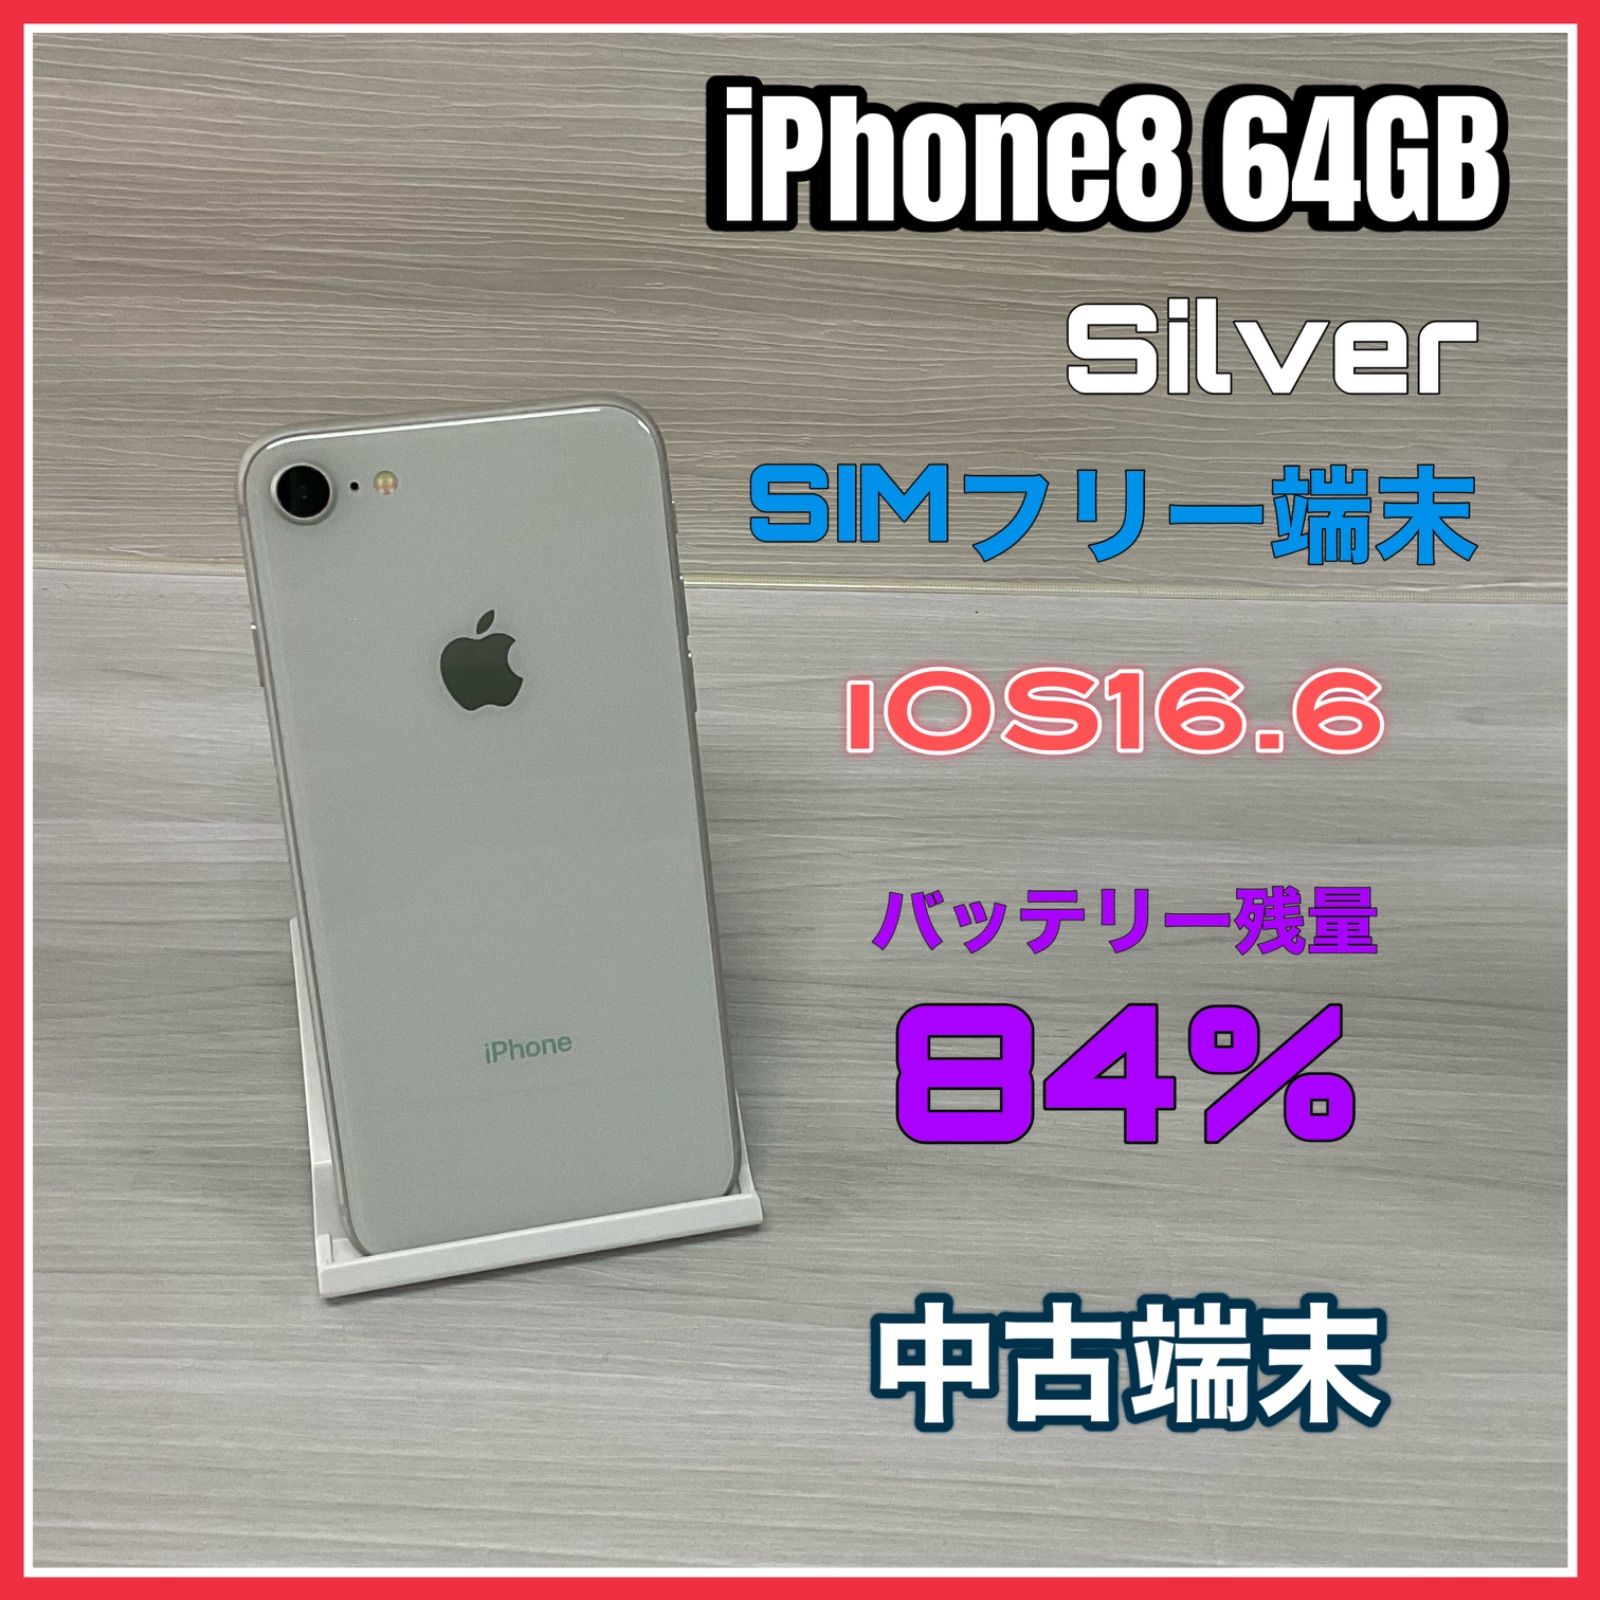 iPhone8 64GB  【中古】- SIMロック解除済 #2549 テレラインサービス 本川店 メルカリ